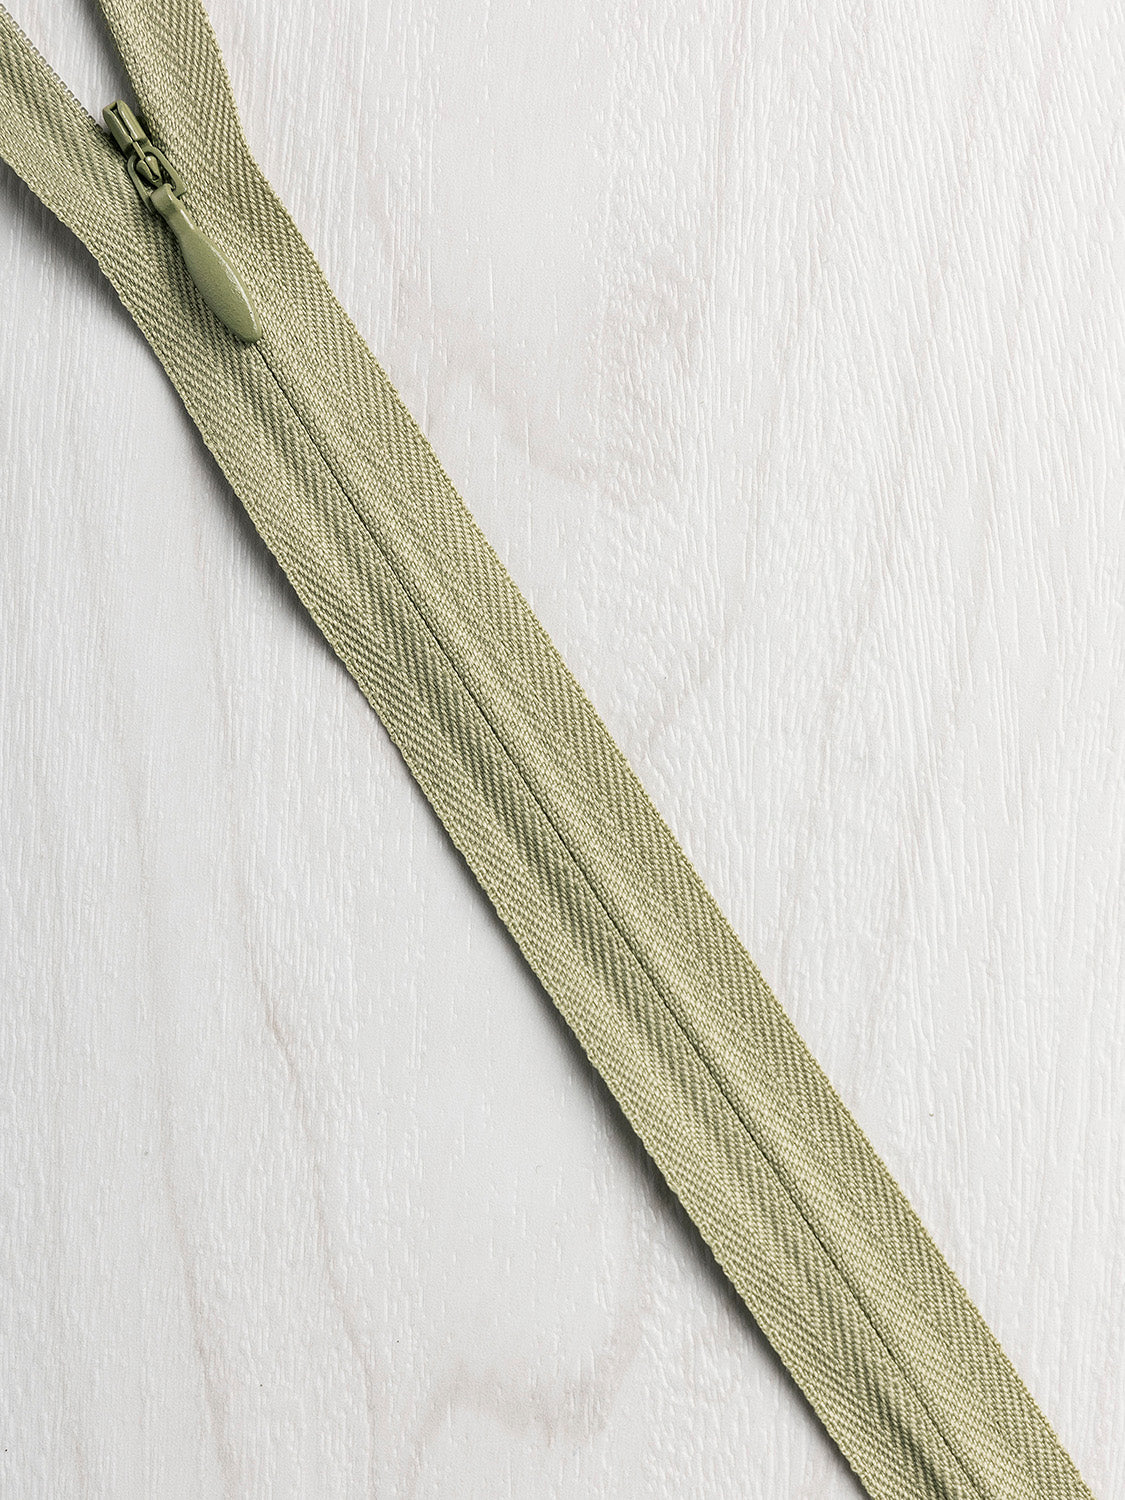 YKK Black Ziplon Invisible Zipper 14 |Harts Fabric